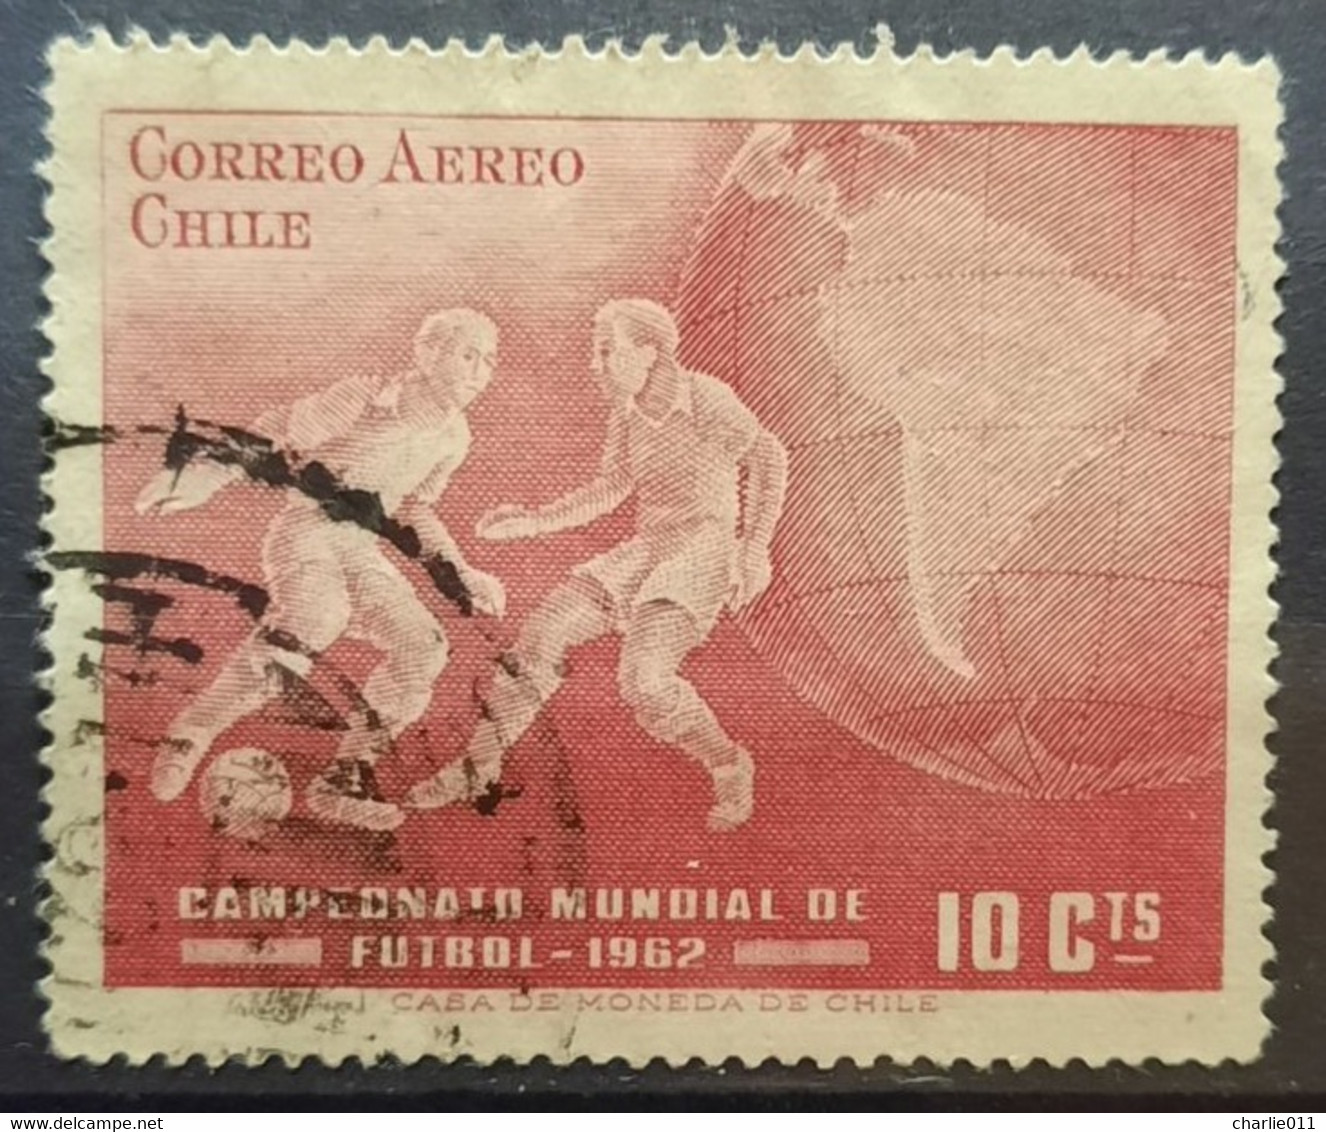 FOOTBALL-10 C -AIRMAIL-WORLD CHAMPIONSHIP-CHILE-1962 - 1962 – Chile